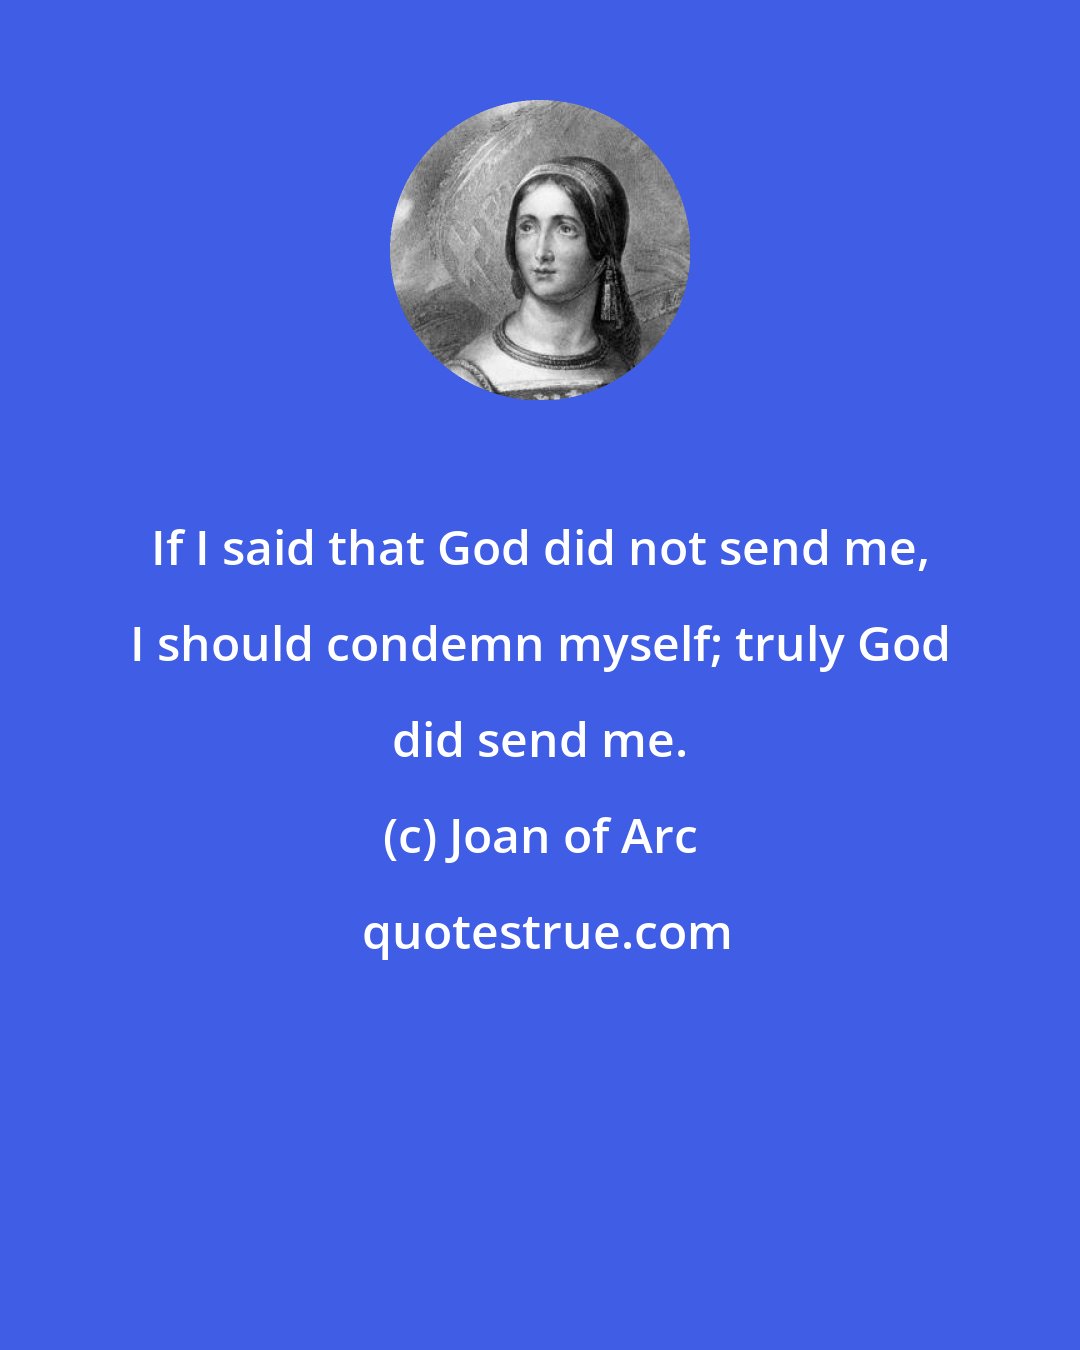 Joan of Arc: If I said that God did not send me, I should condemn myself; truly God did send me.